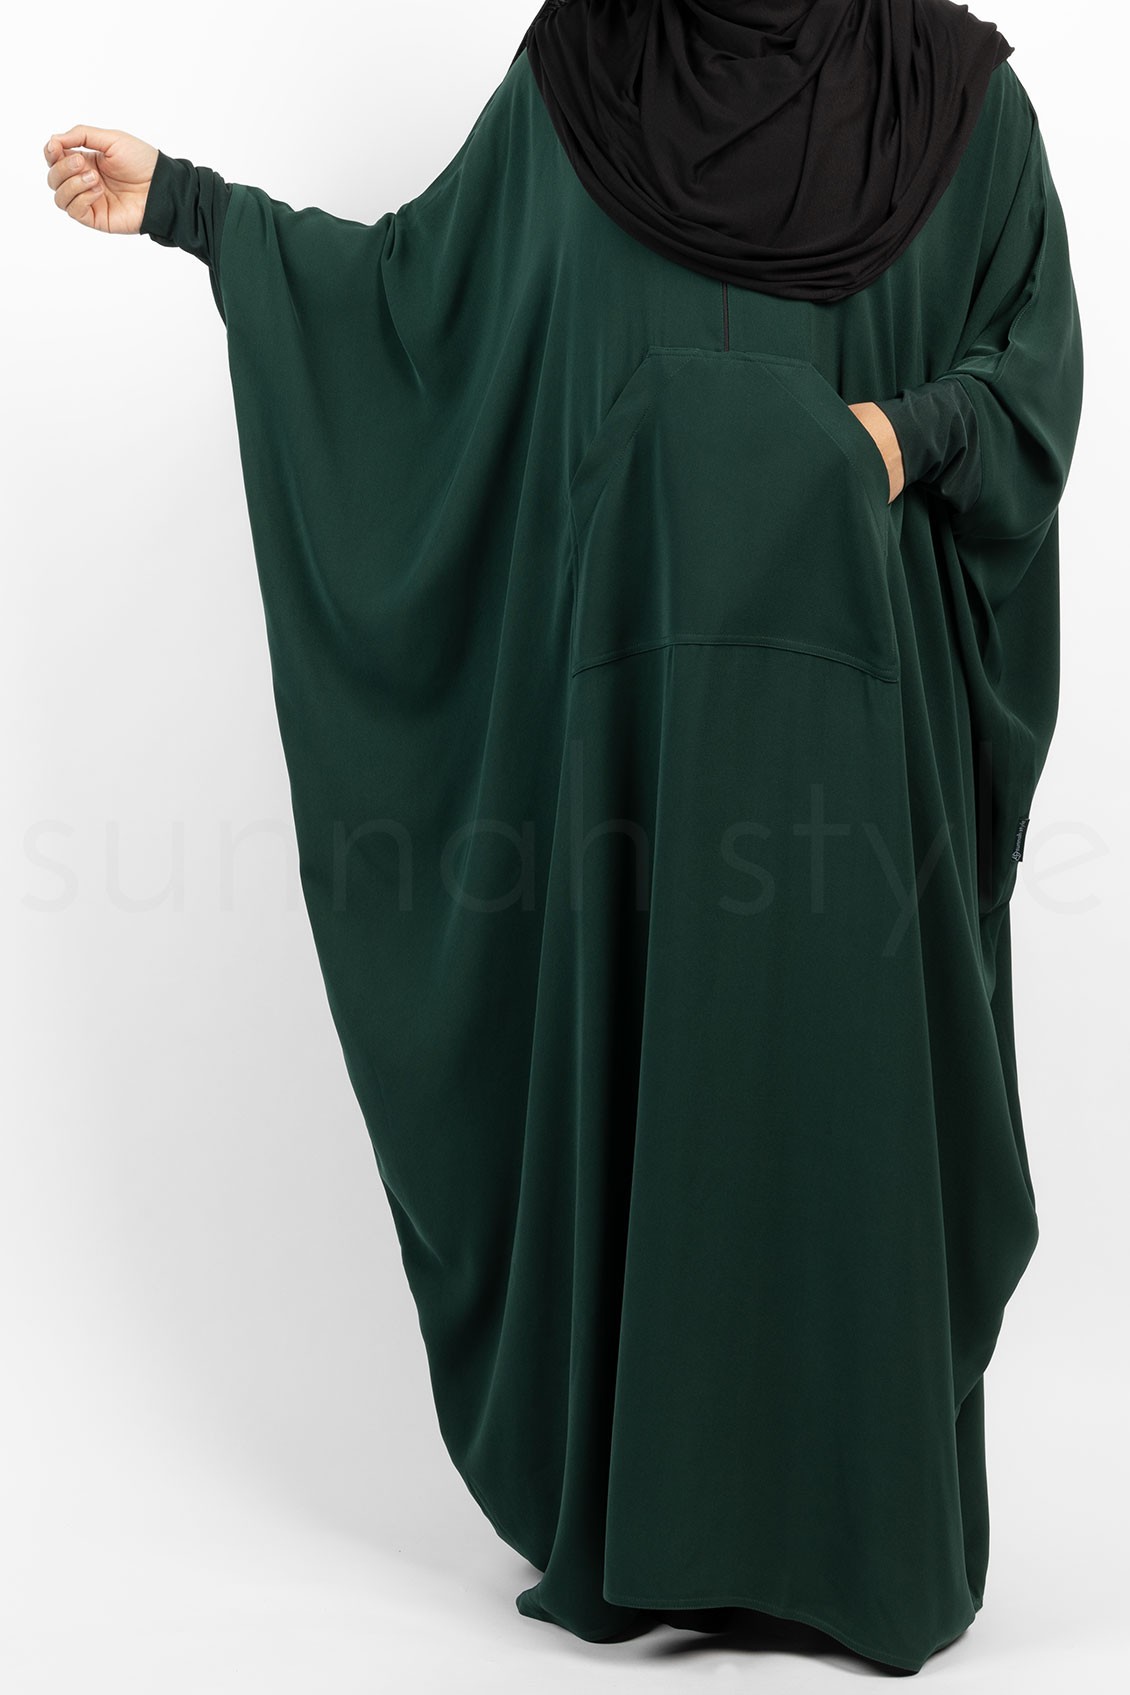 Sunnah Style Essentials Bisht Comfort Abaya Pine